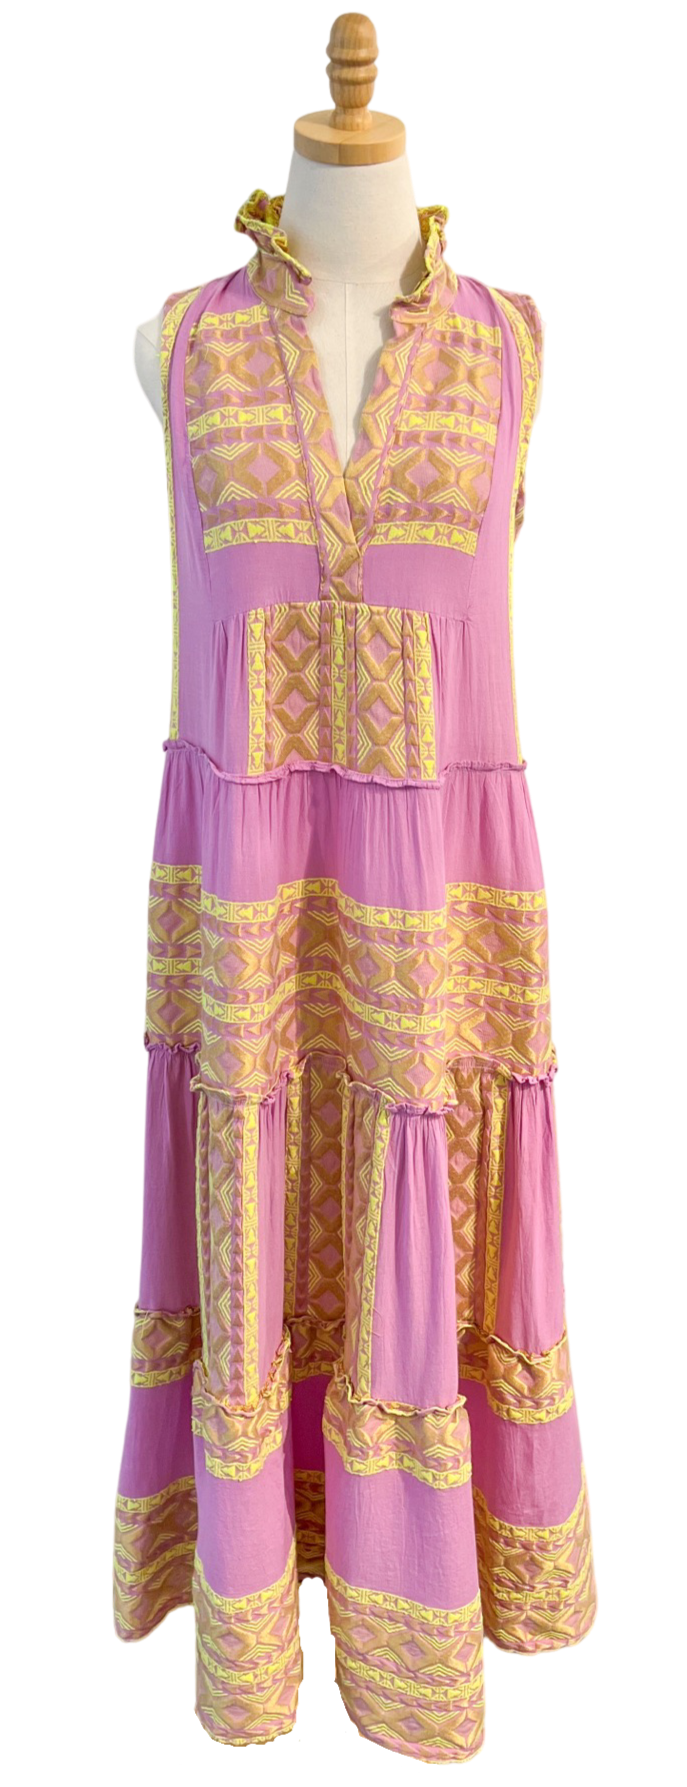 Lace Apparel Lace | Lilac Sleeveless Maxi Dress